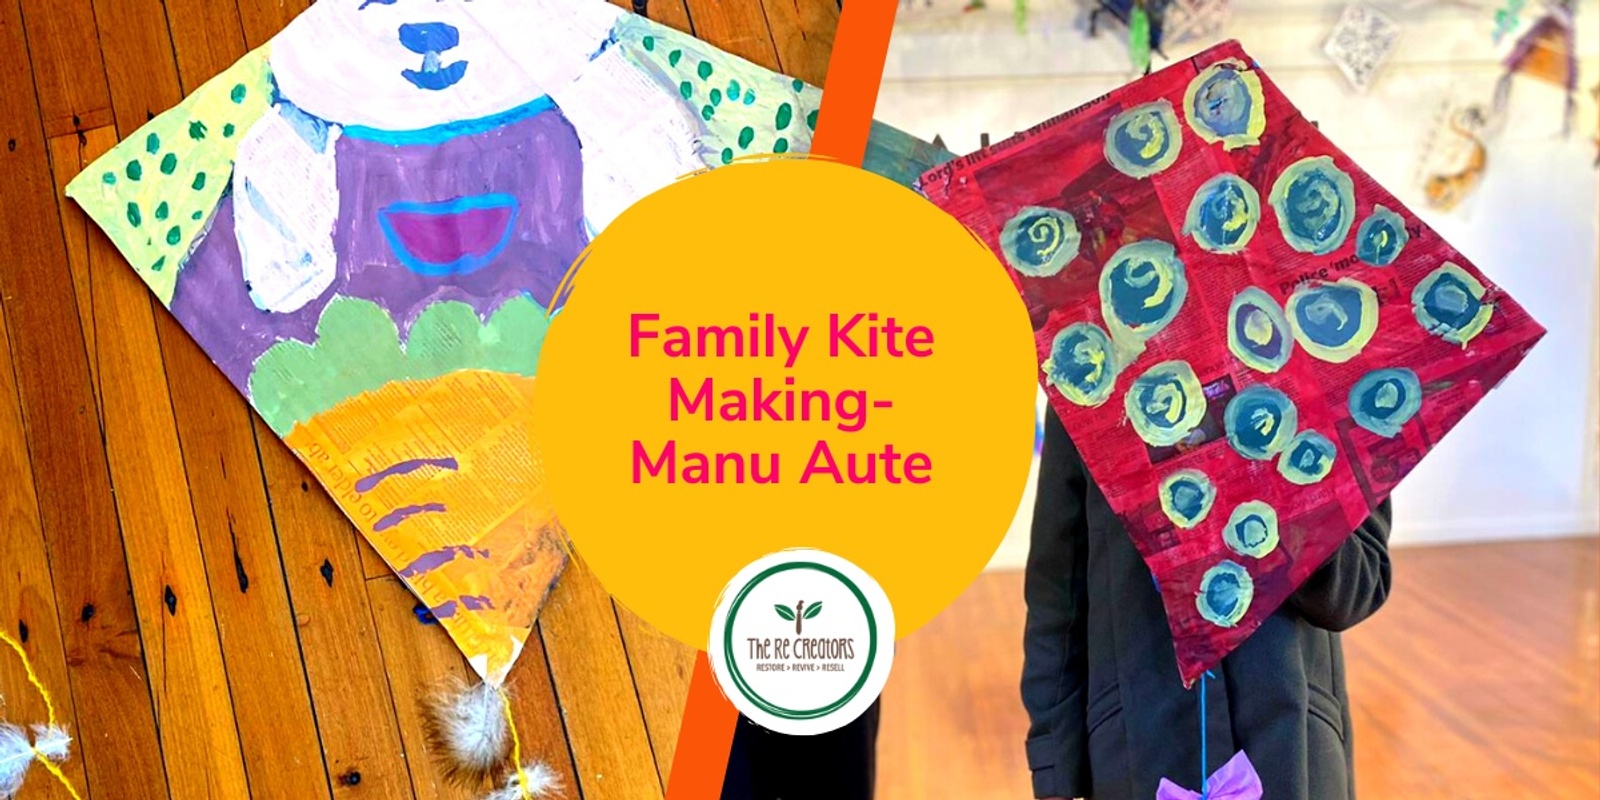 Family Kite Making - Manu Aute, Mairangi Arts Centre, Saturday, 8 July, 11am - 1pm